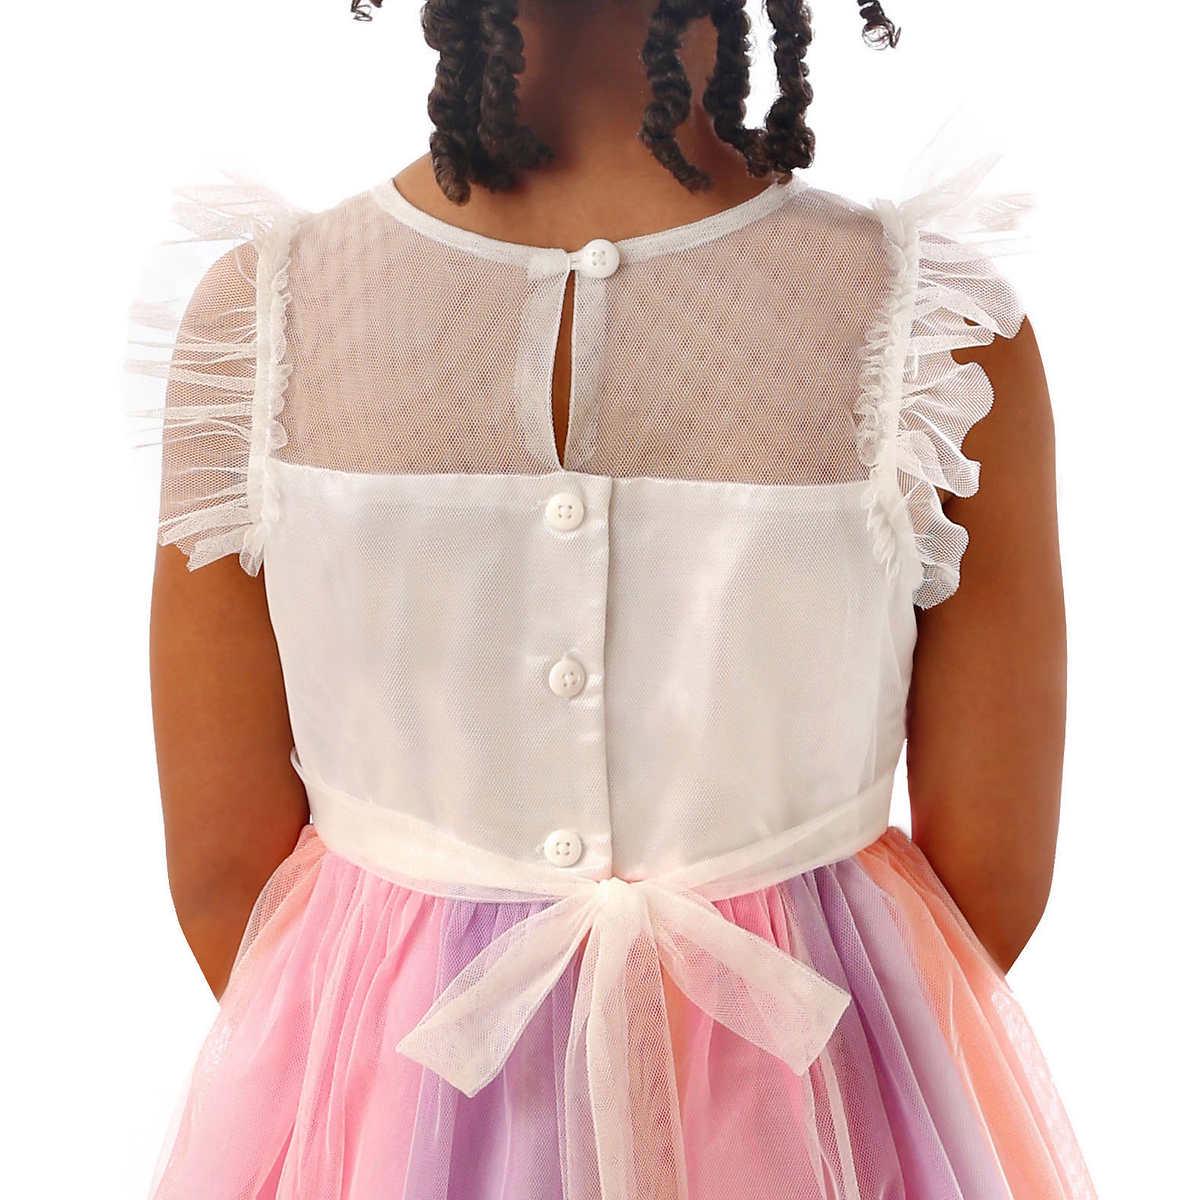 Jona Michelle Kids' Spring Dress